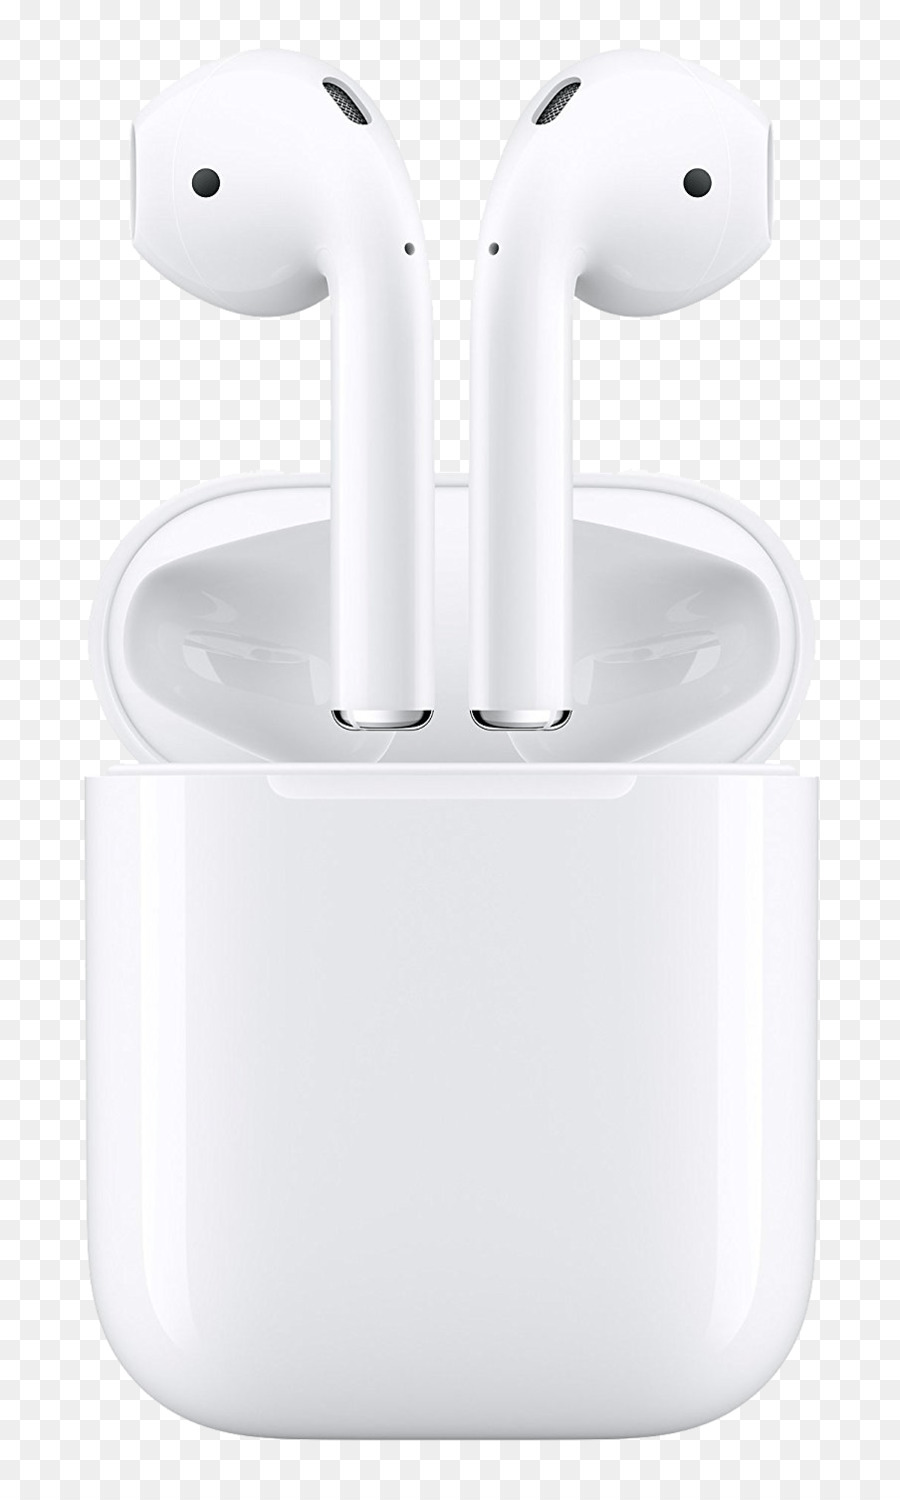 AirPods iPhone 7 Cuffie Auricolare Bluetooth - cuffie